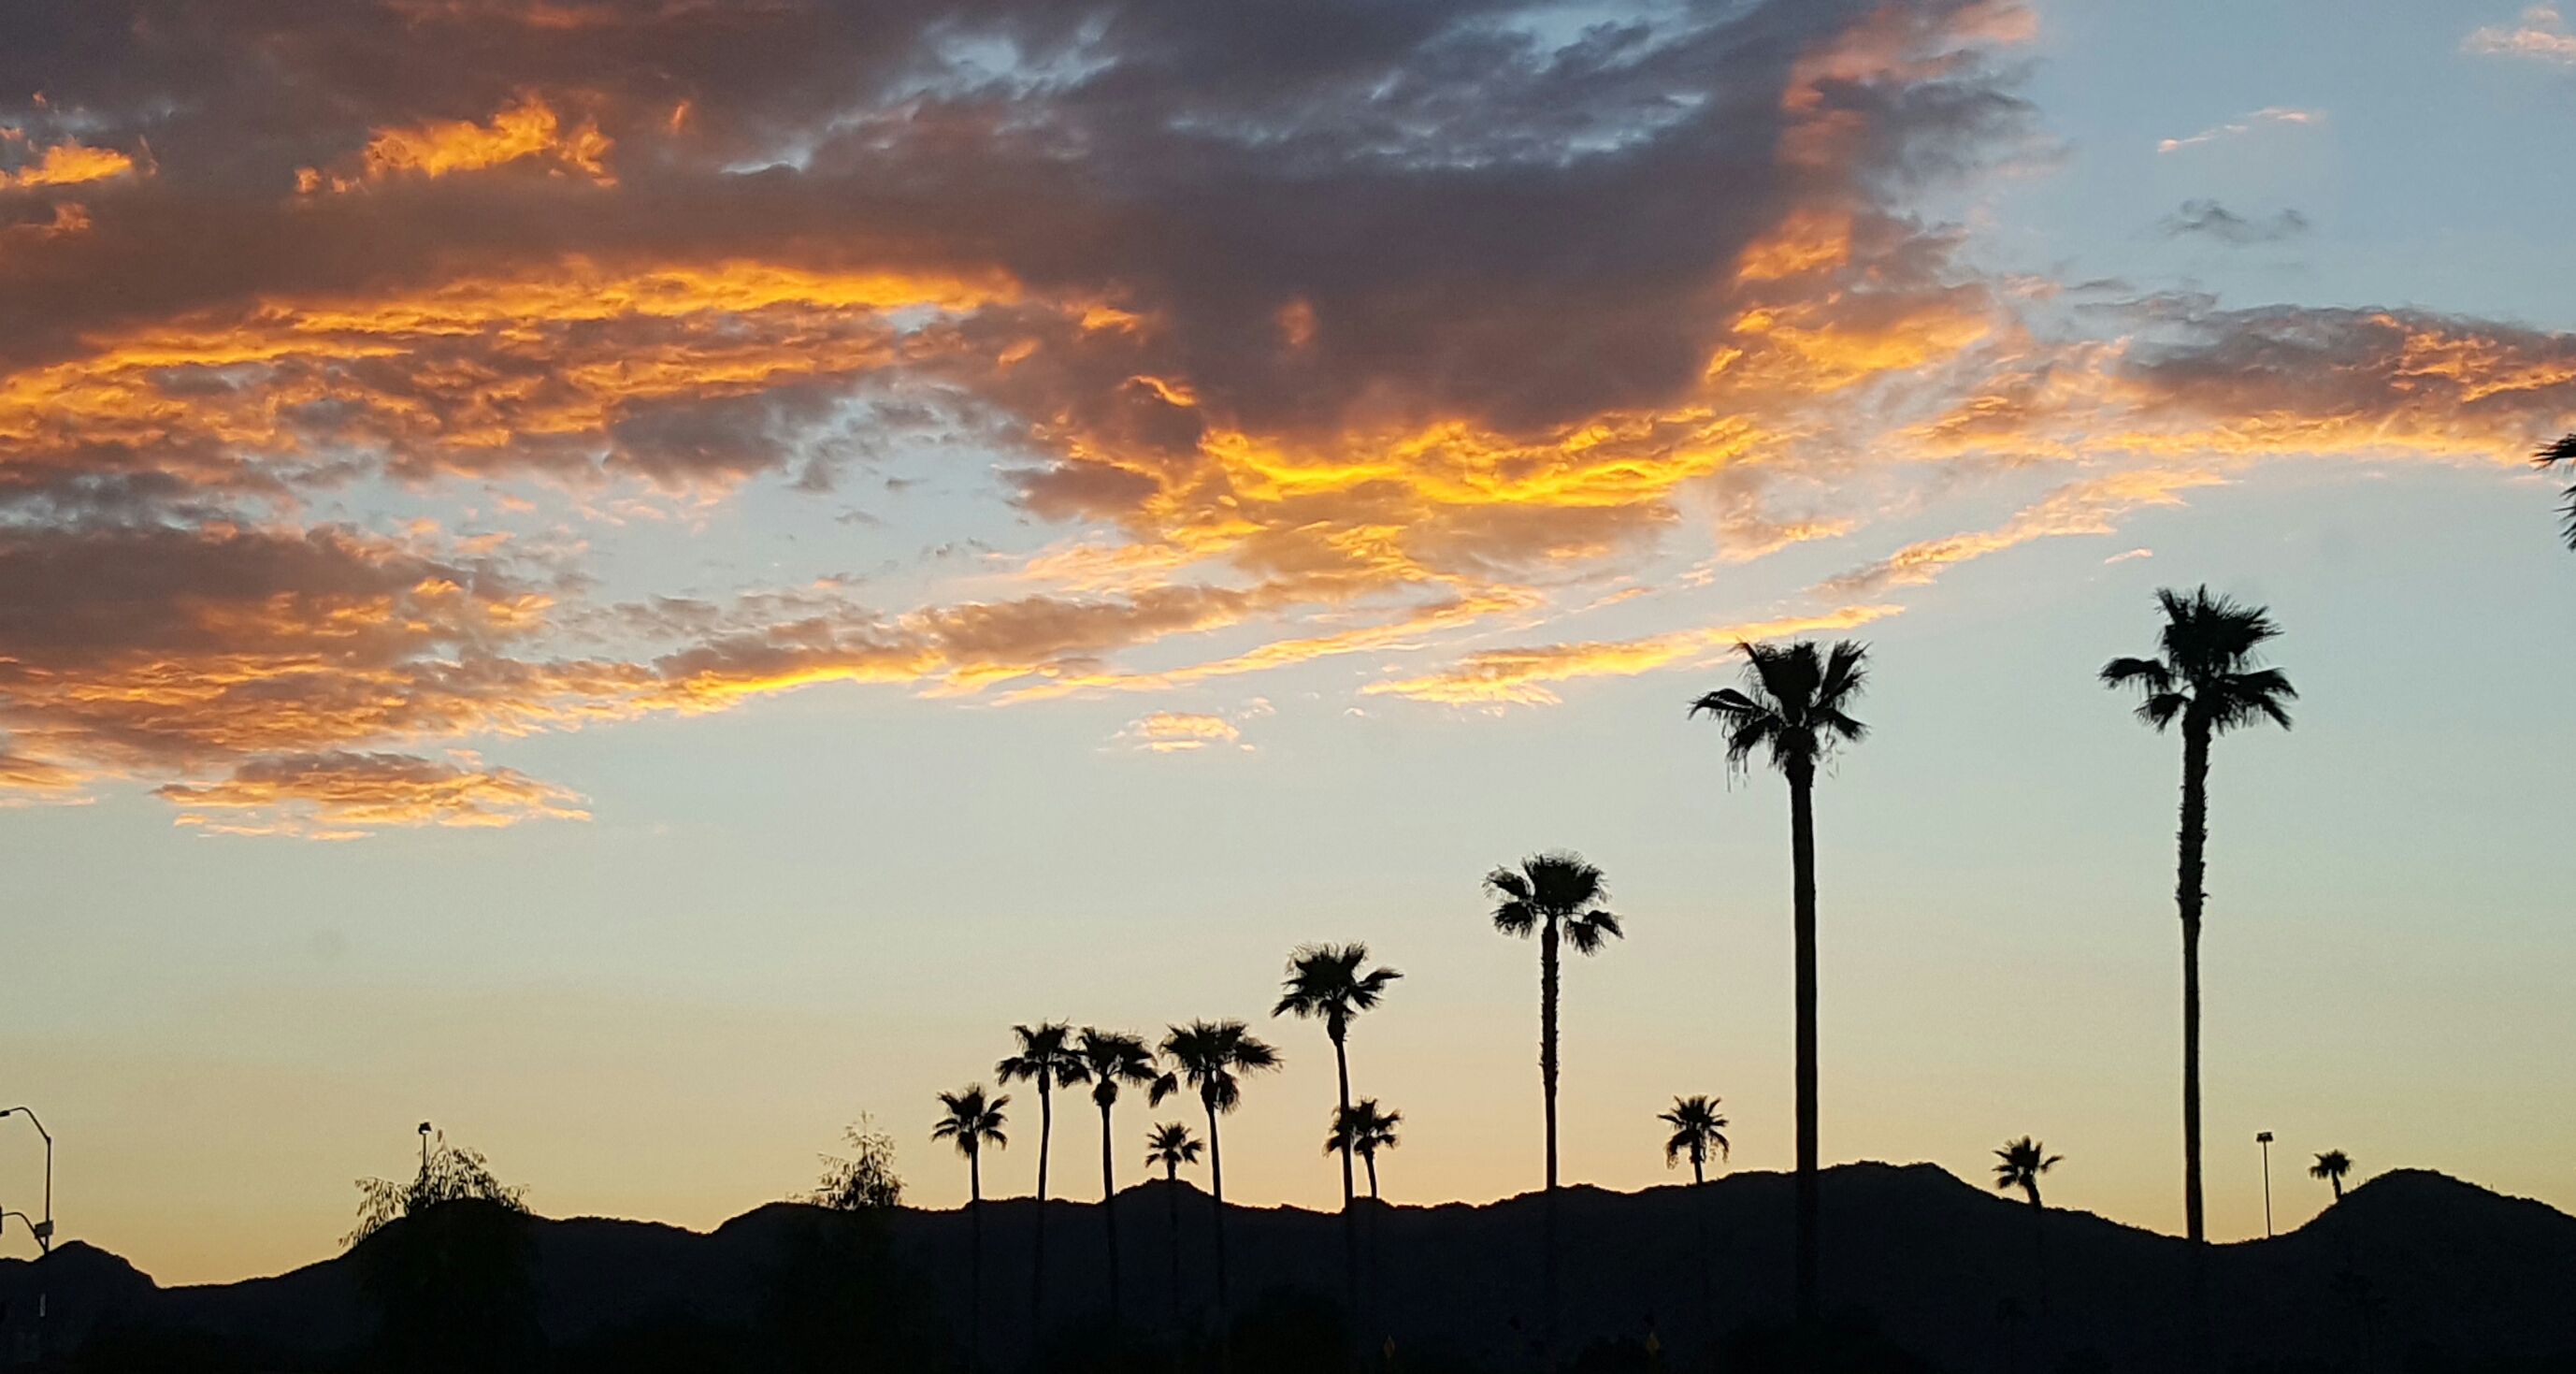 Sunset over Tempe, Arizona